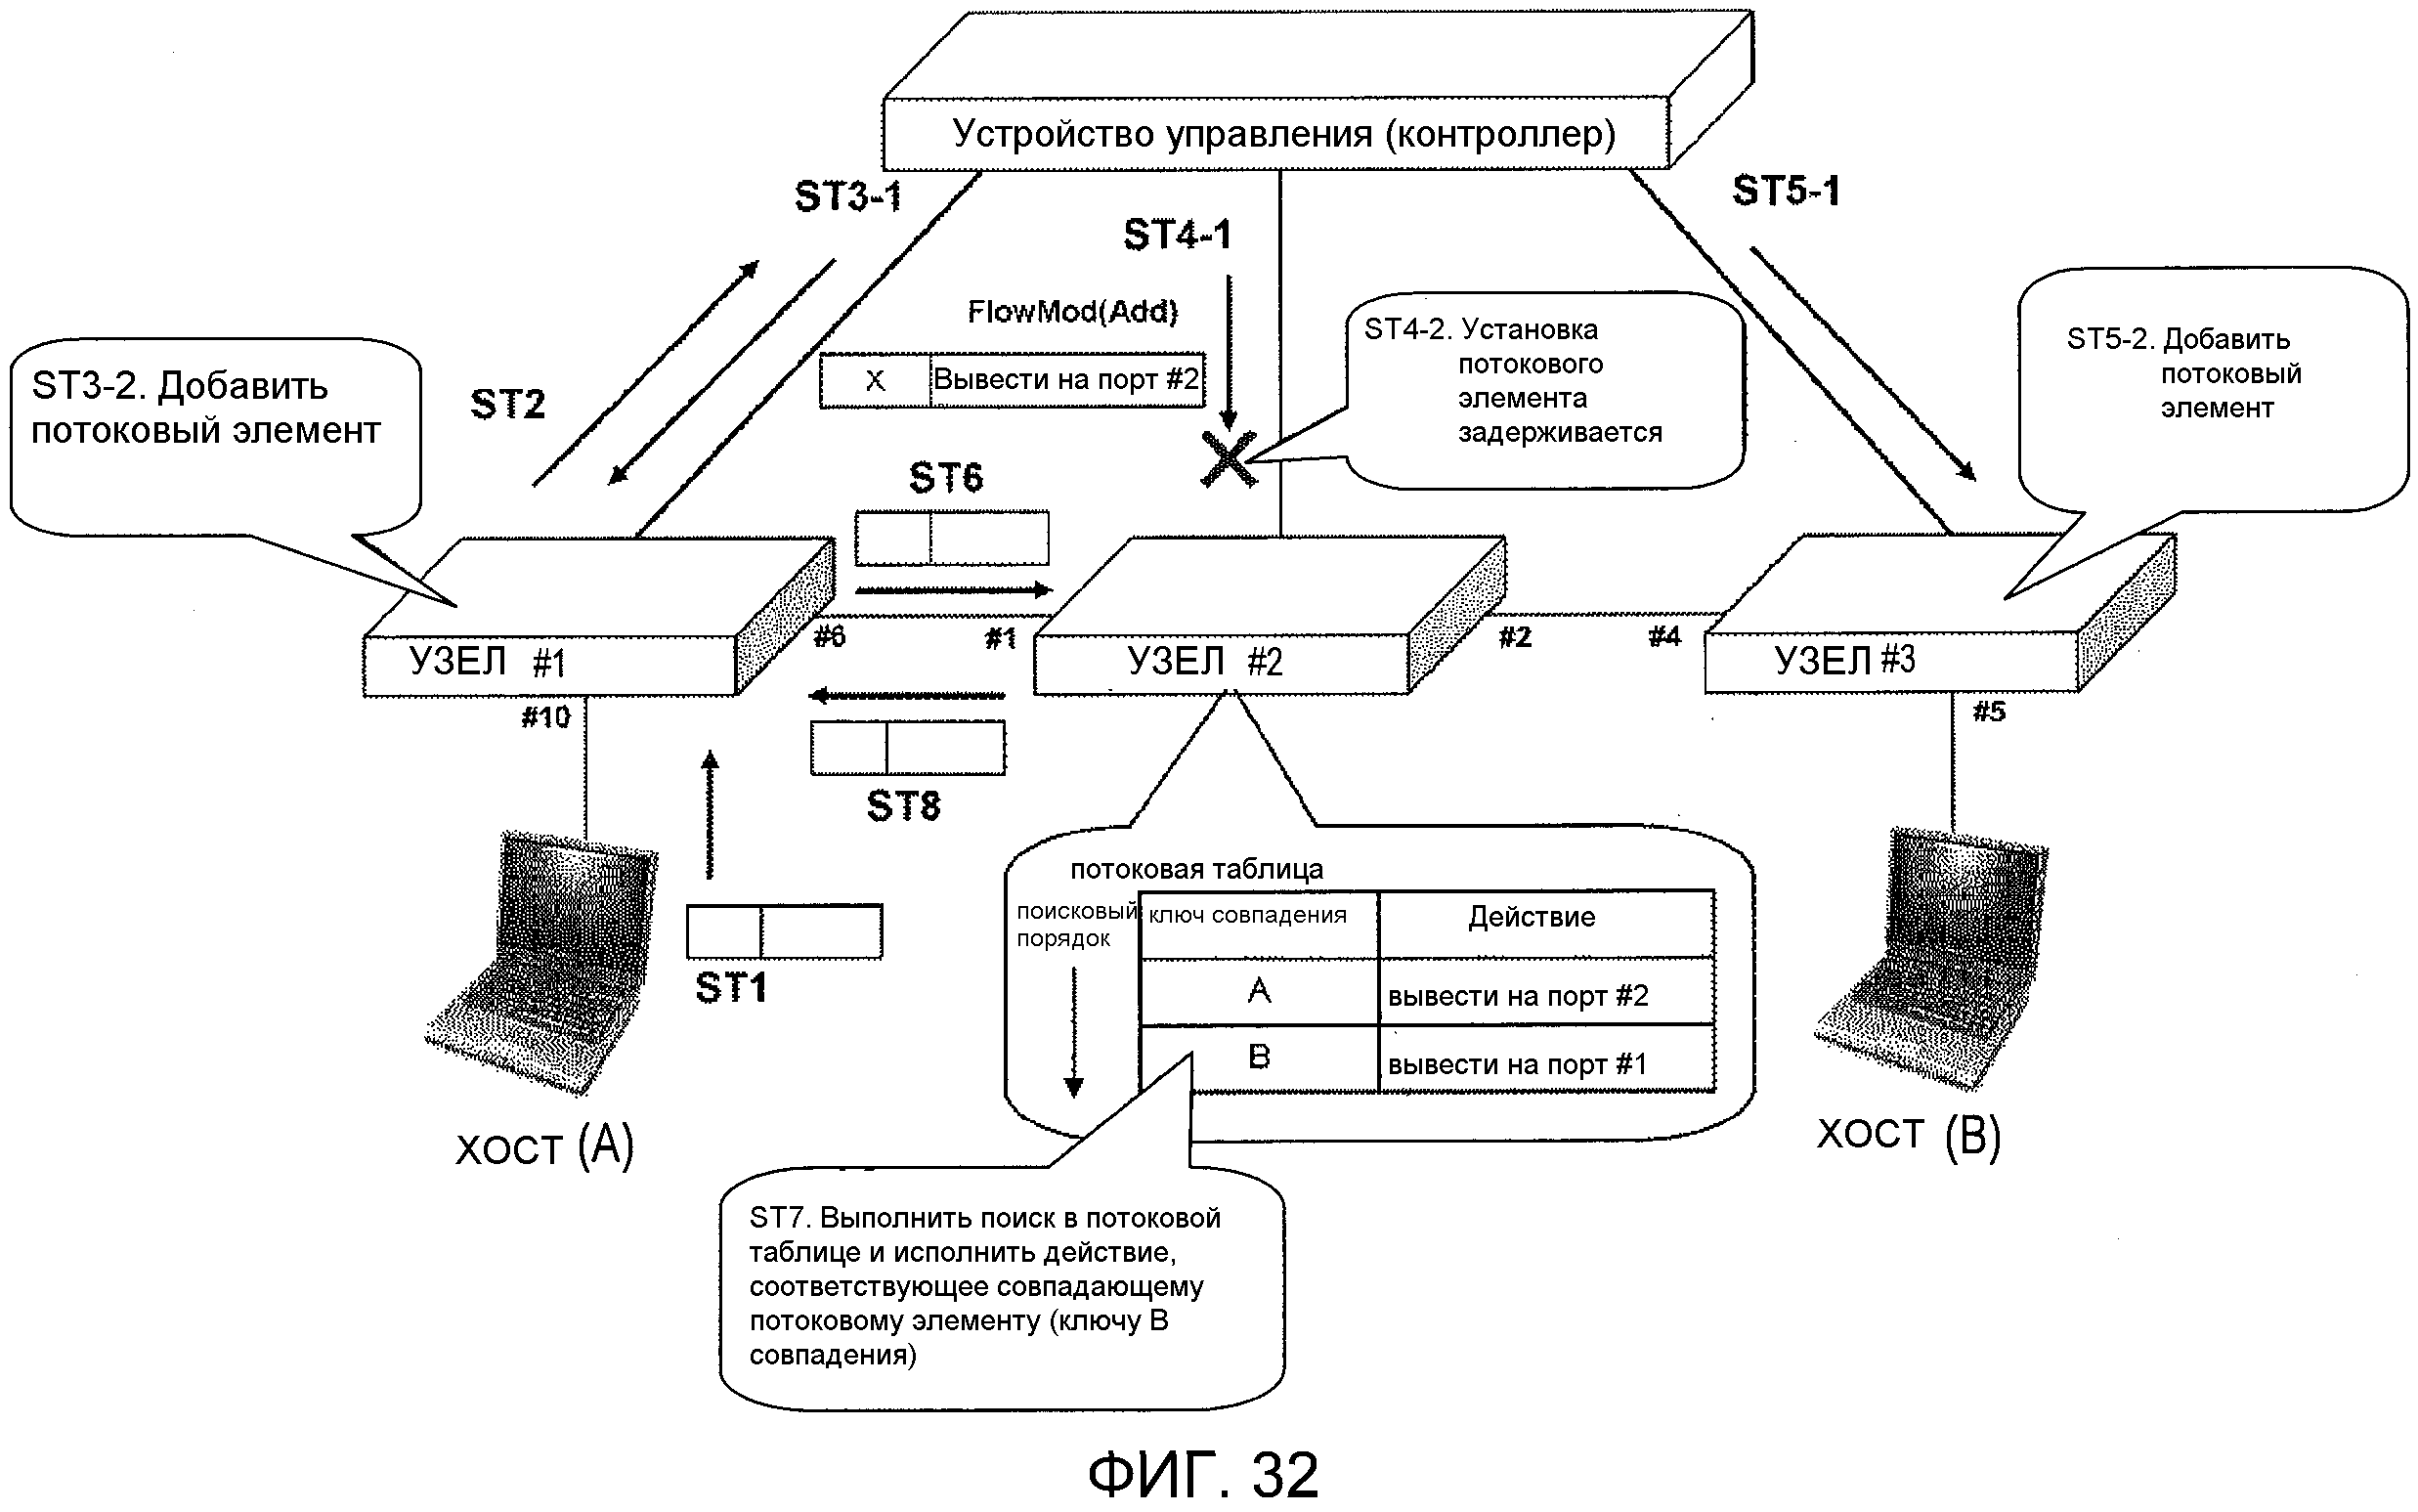 Стационарные узлы связи структурная схема